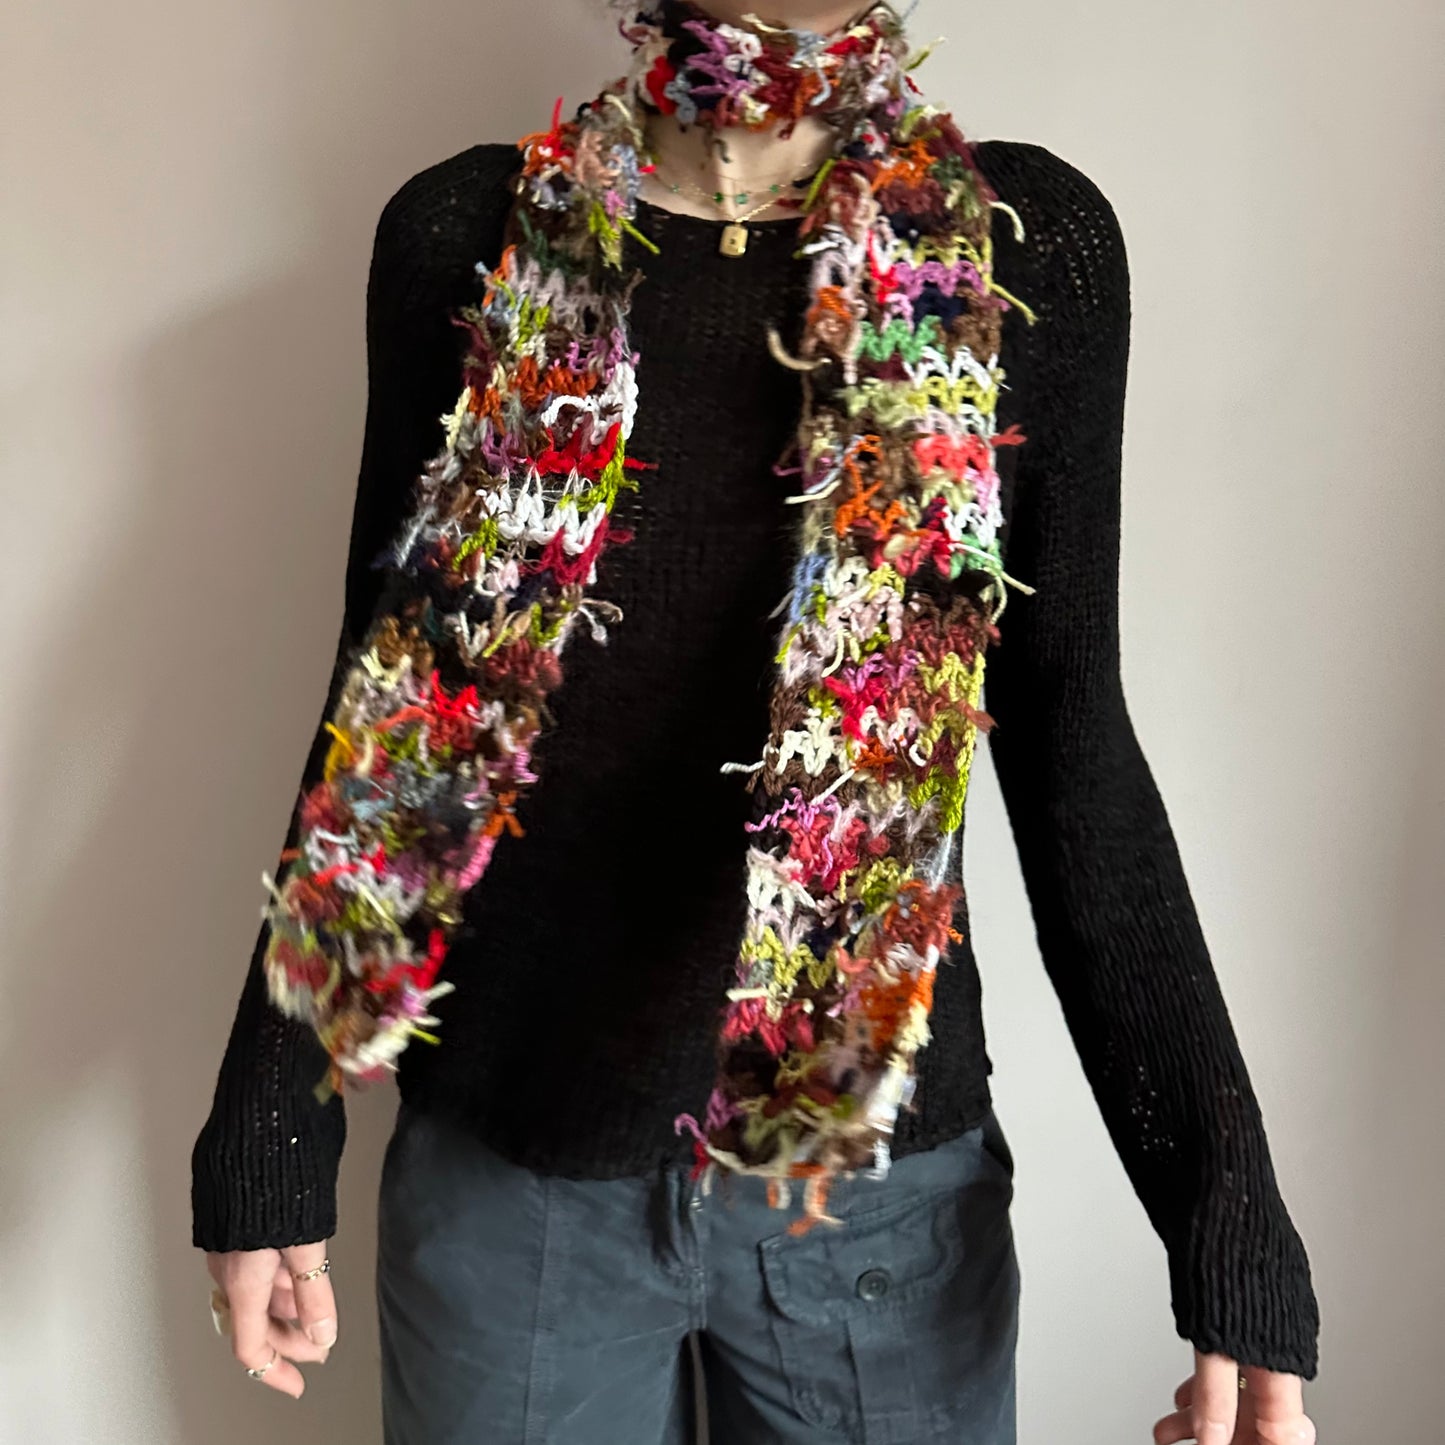 Scrappy skinny scarf #3 - handmade from leftover yarn scraps